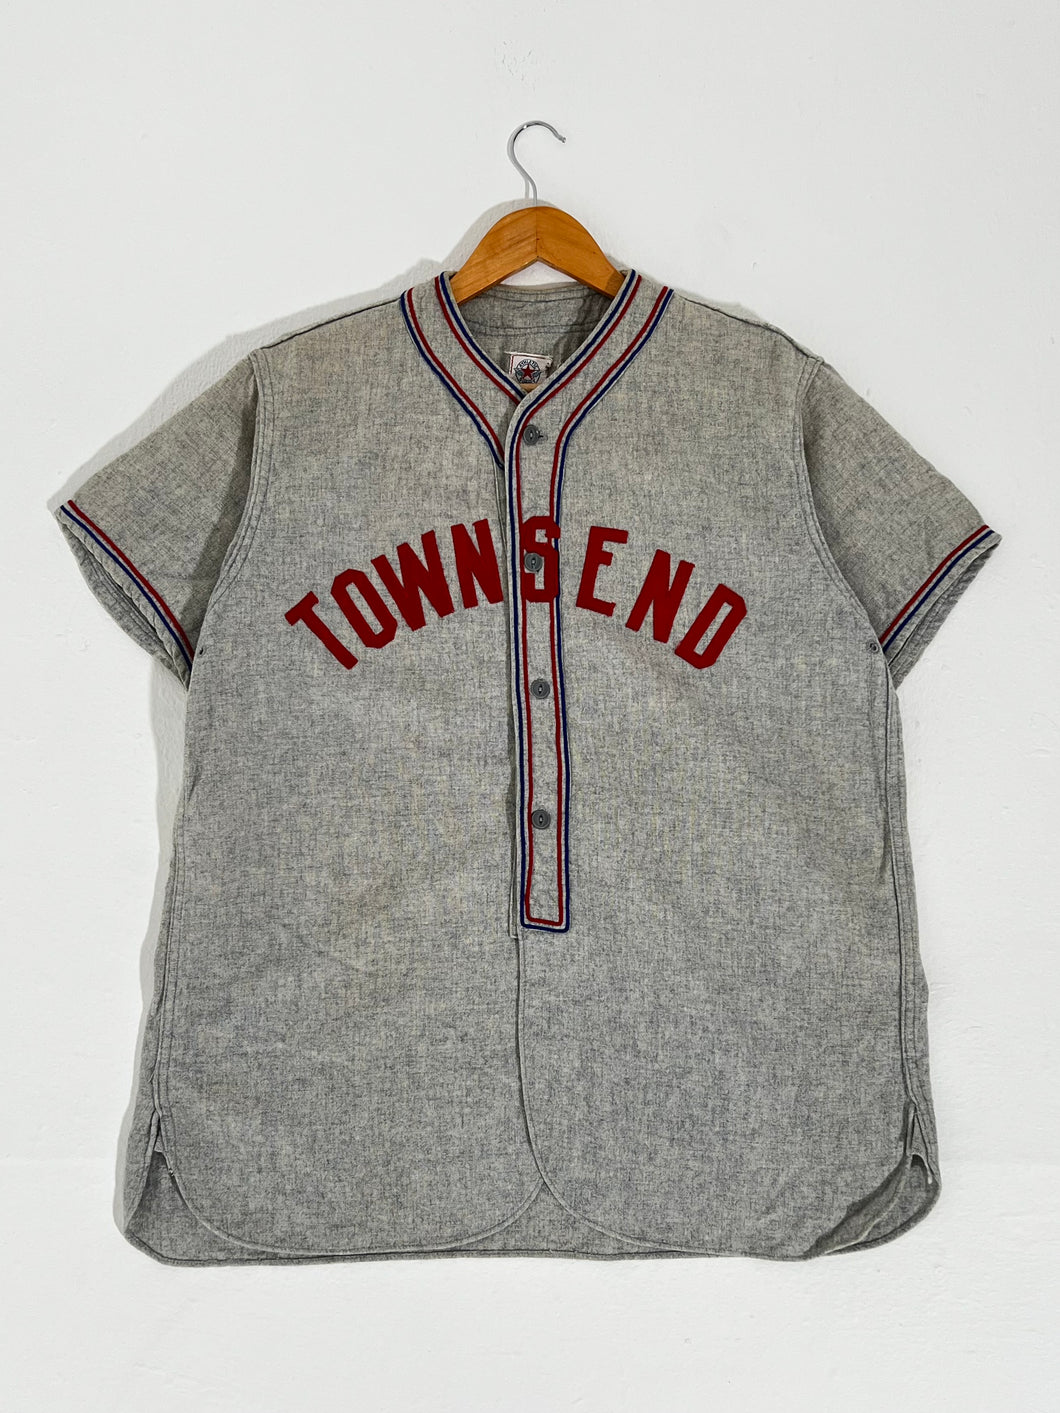 Vintage Wool Townsend Baseball Jersey Sz. L